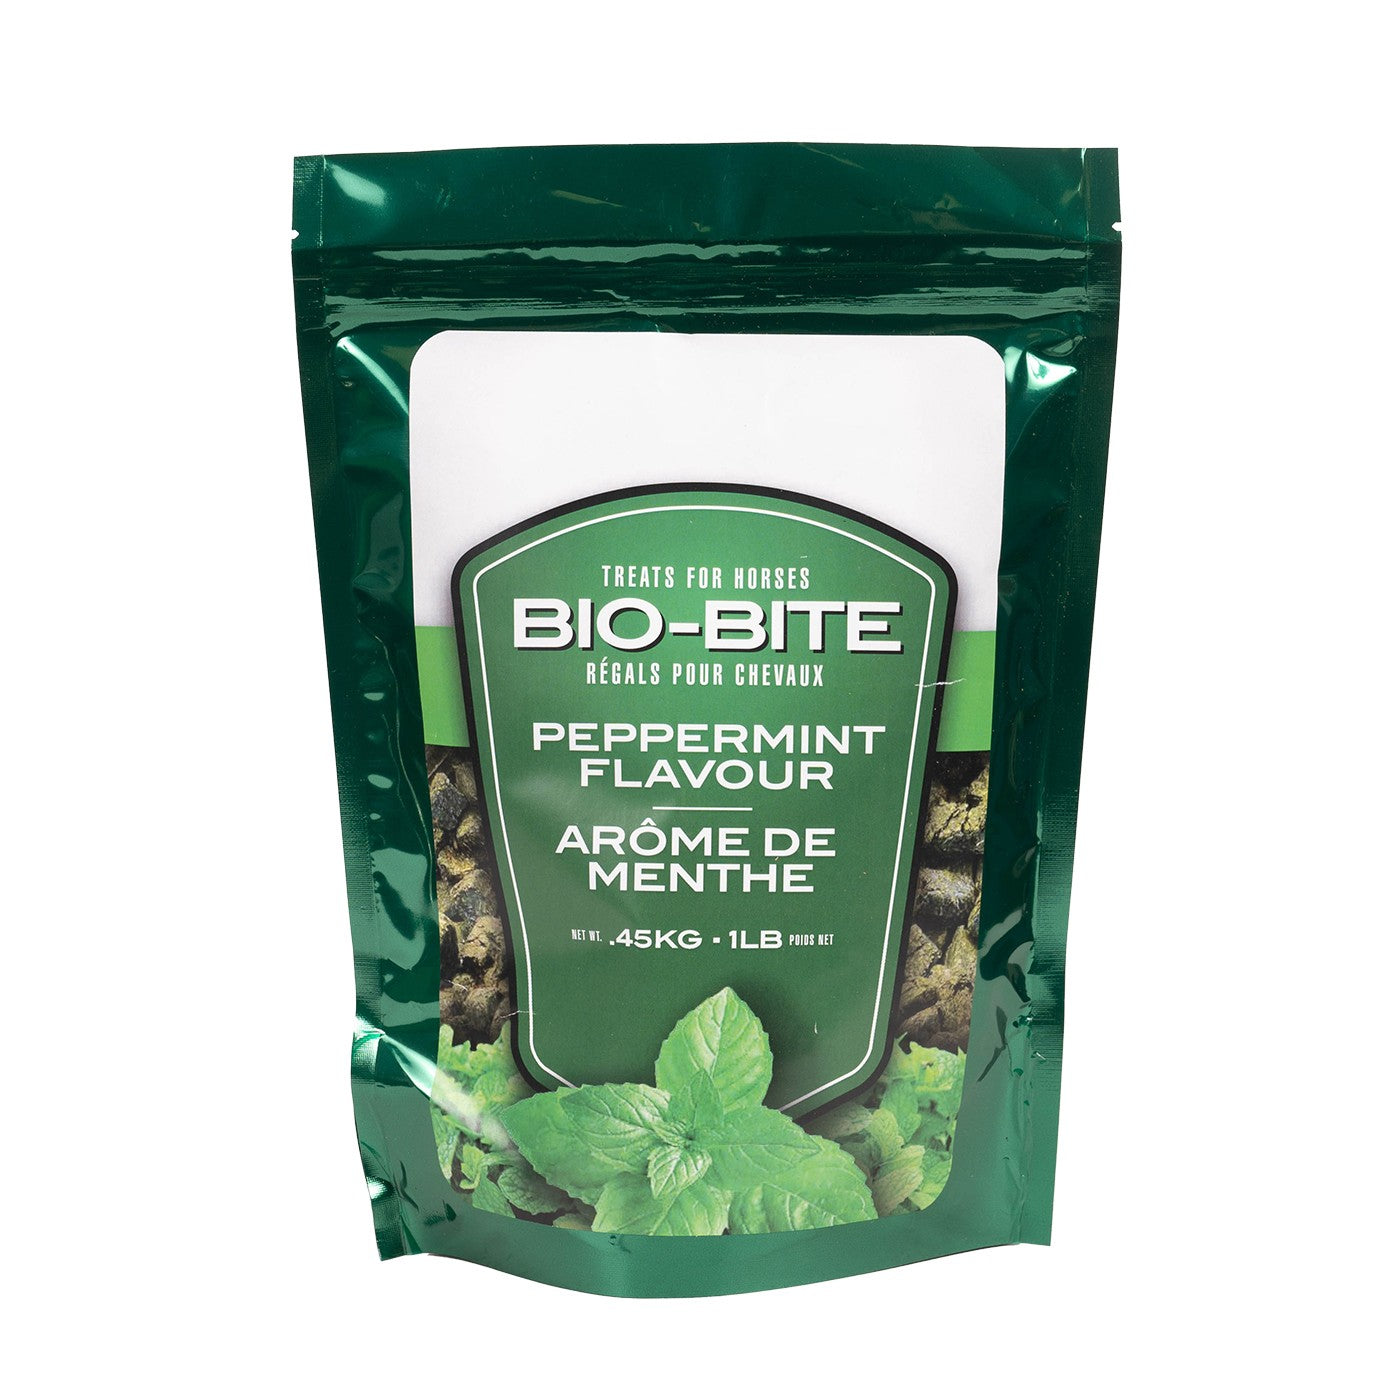 Bio-bite treats